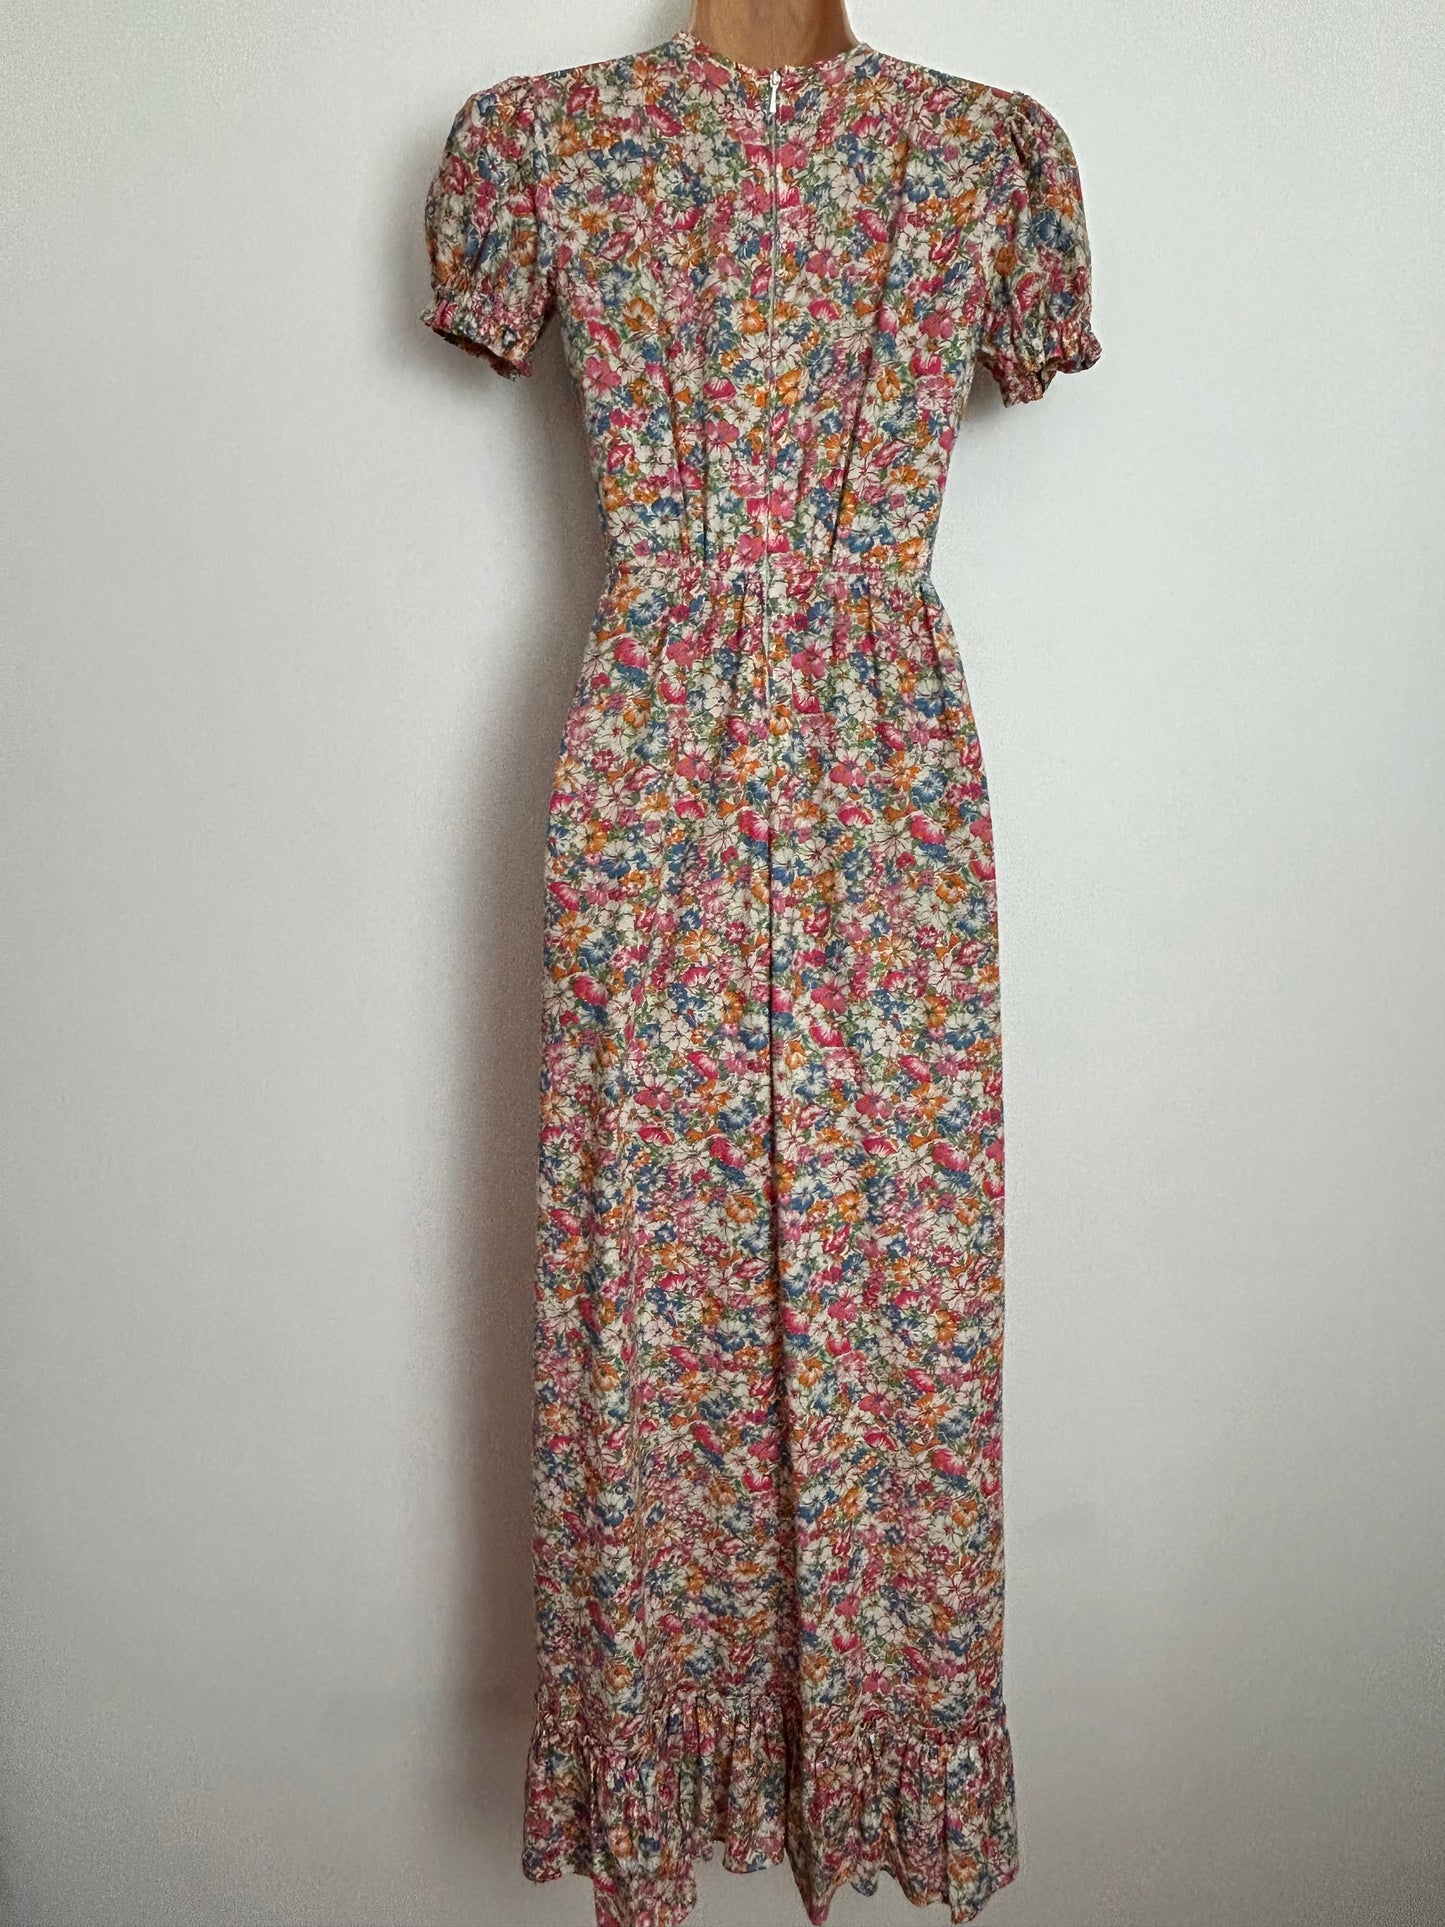 Vintage 1970s UK Size 6-8 White Orange Pink & Blue Ditsy Floral Print Short Sleeve Cotton Prairie Boho Maxi Dress